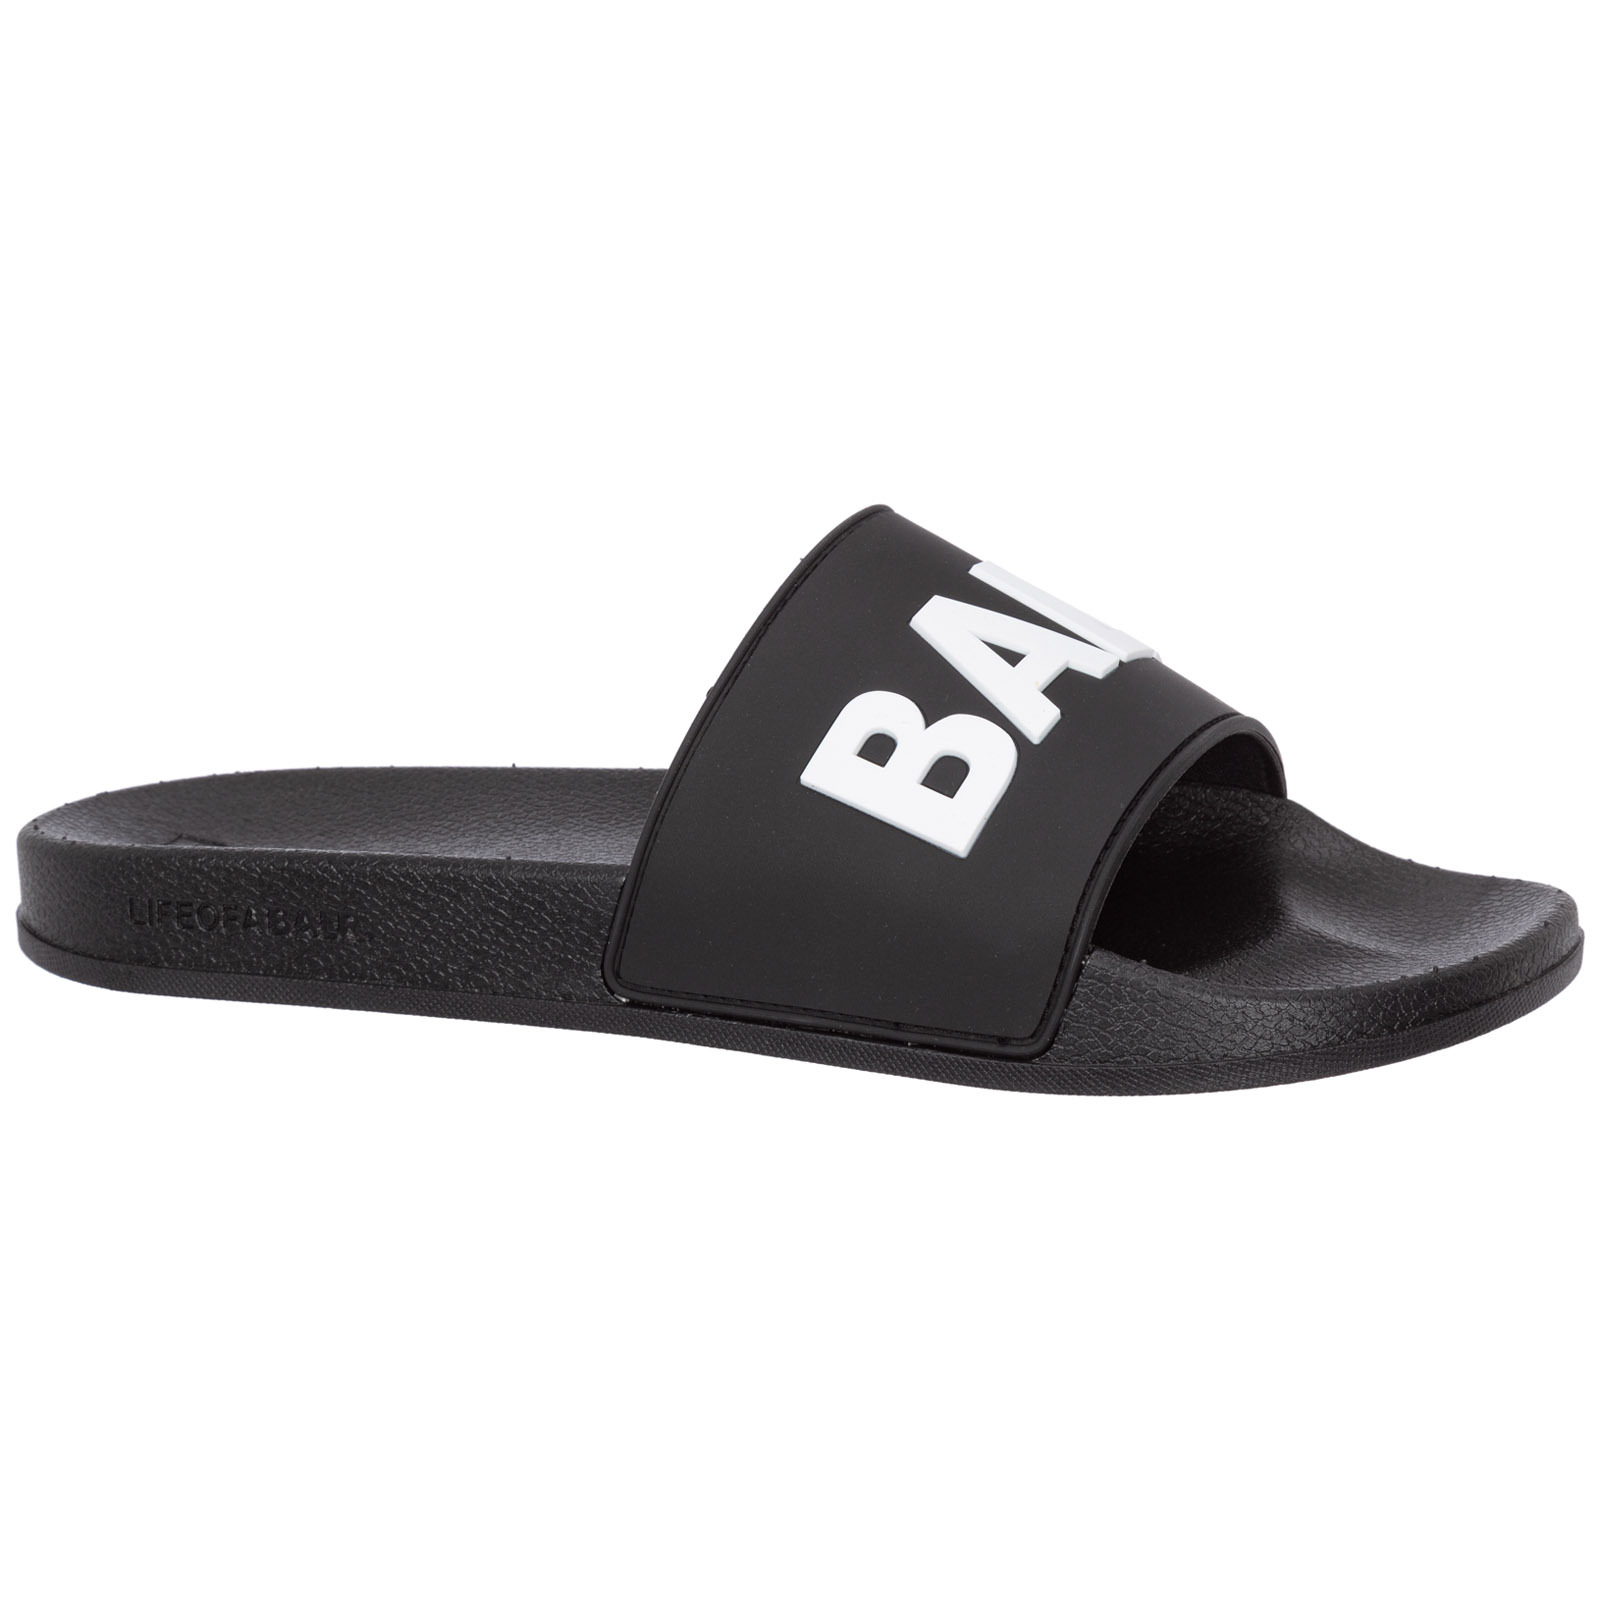 BALR. Men's slippers sandals rubber